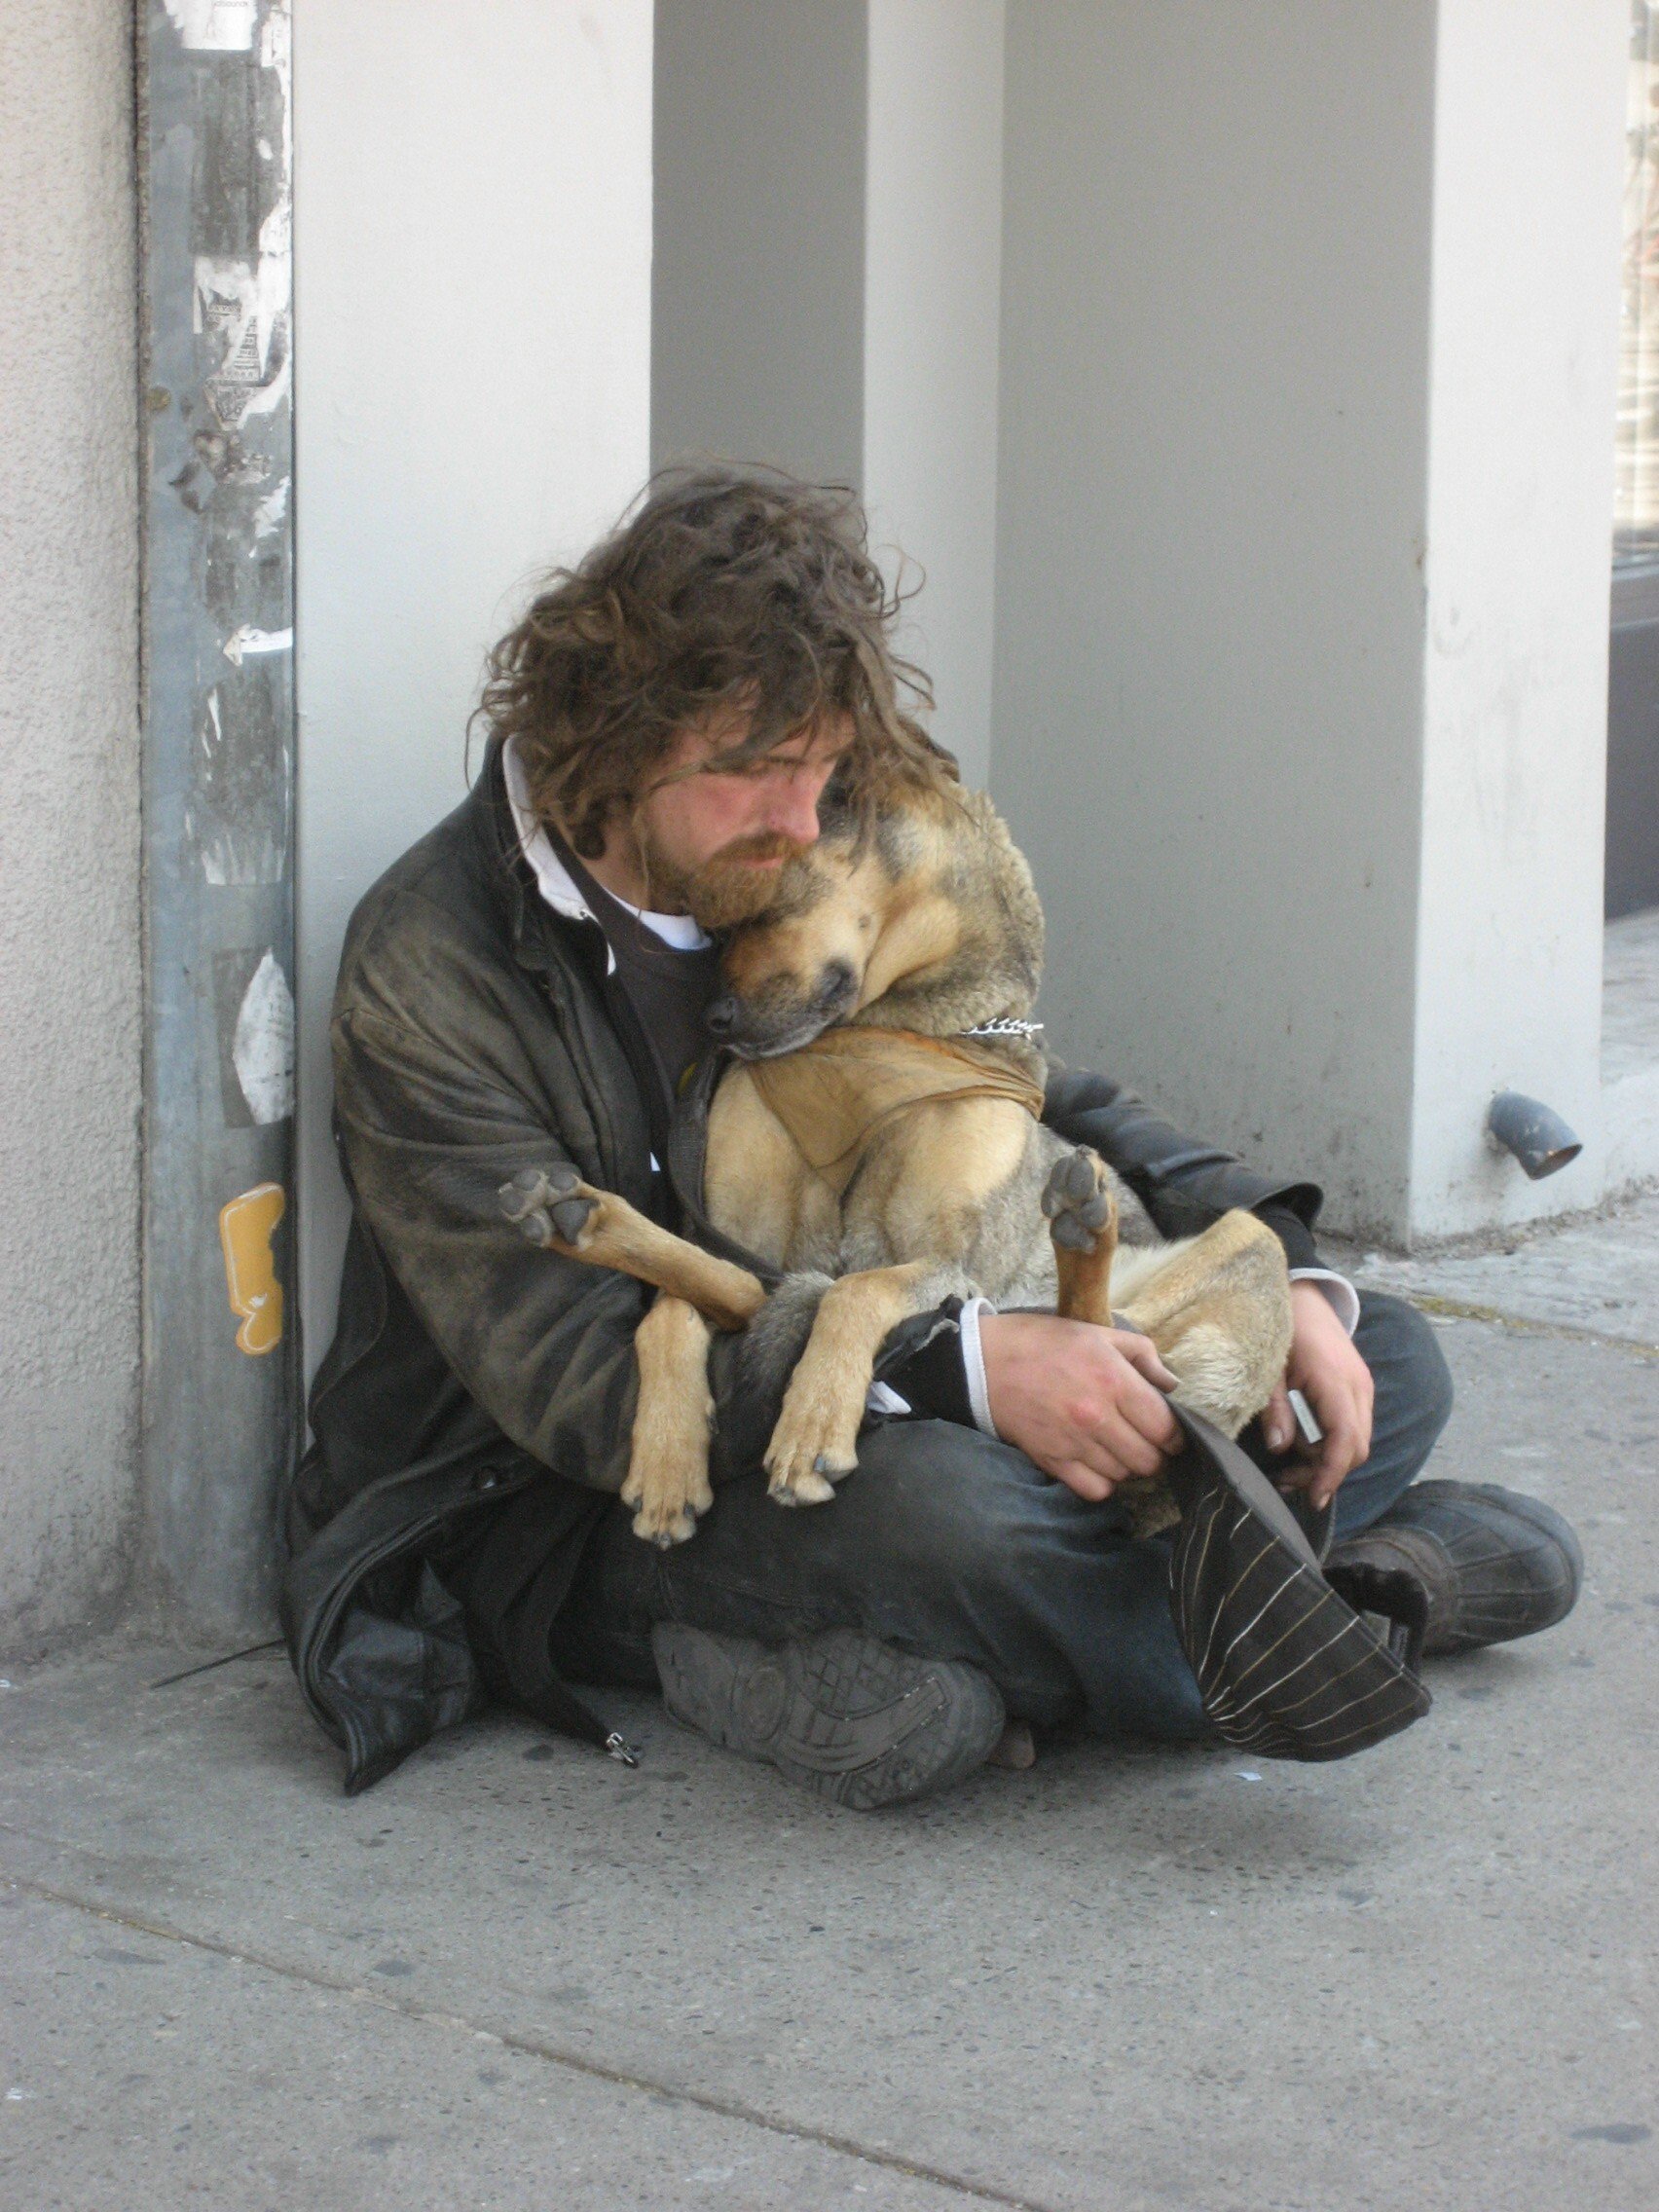 http://newworldodor.files.wordpress.com/2009/02/homeless-cuddling-dog-by-kirsten-bole-100-dpi.jpg